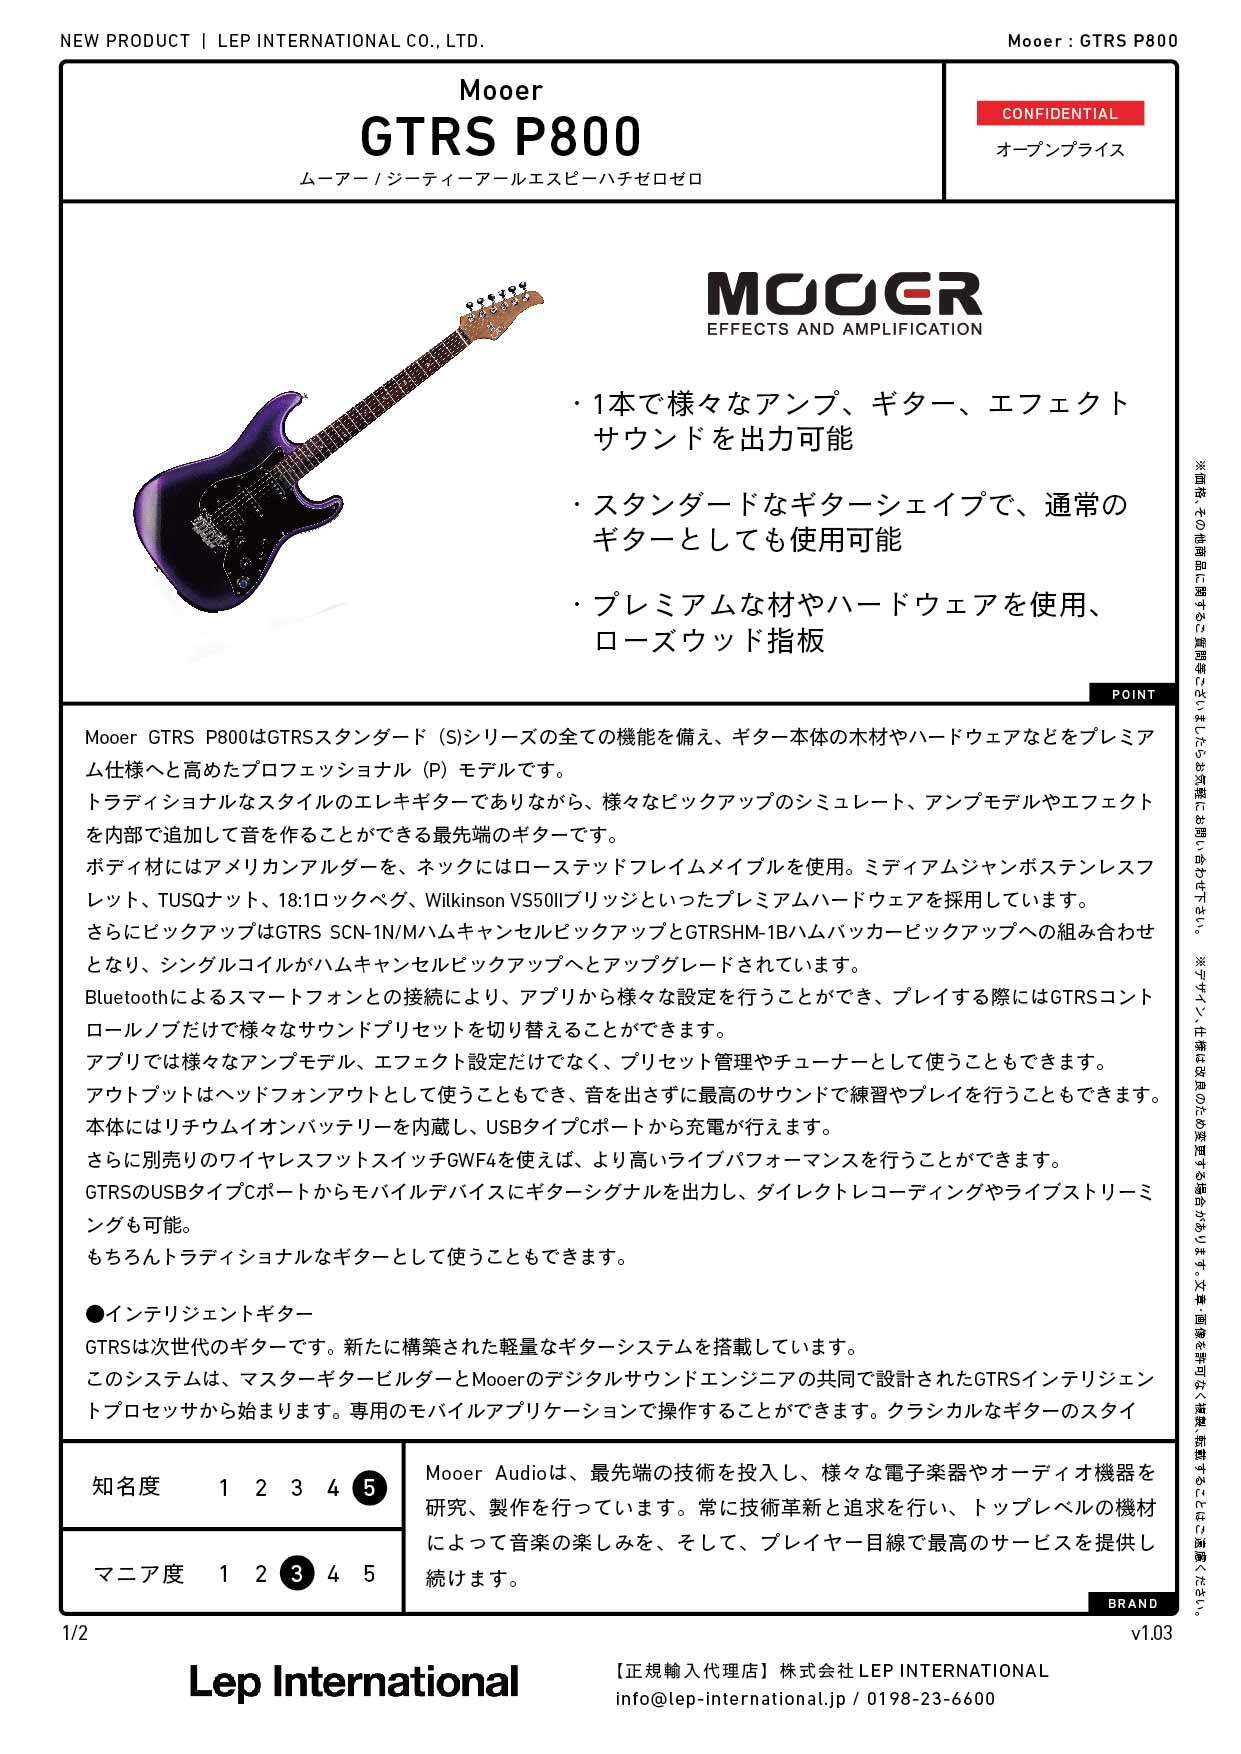 Mooer/GTRS P800